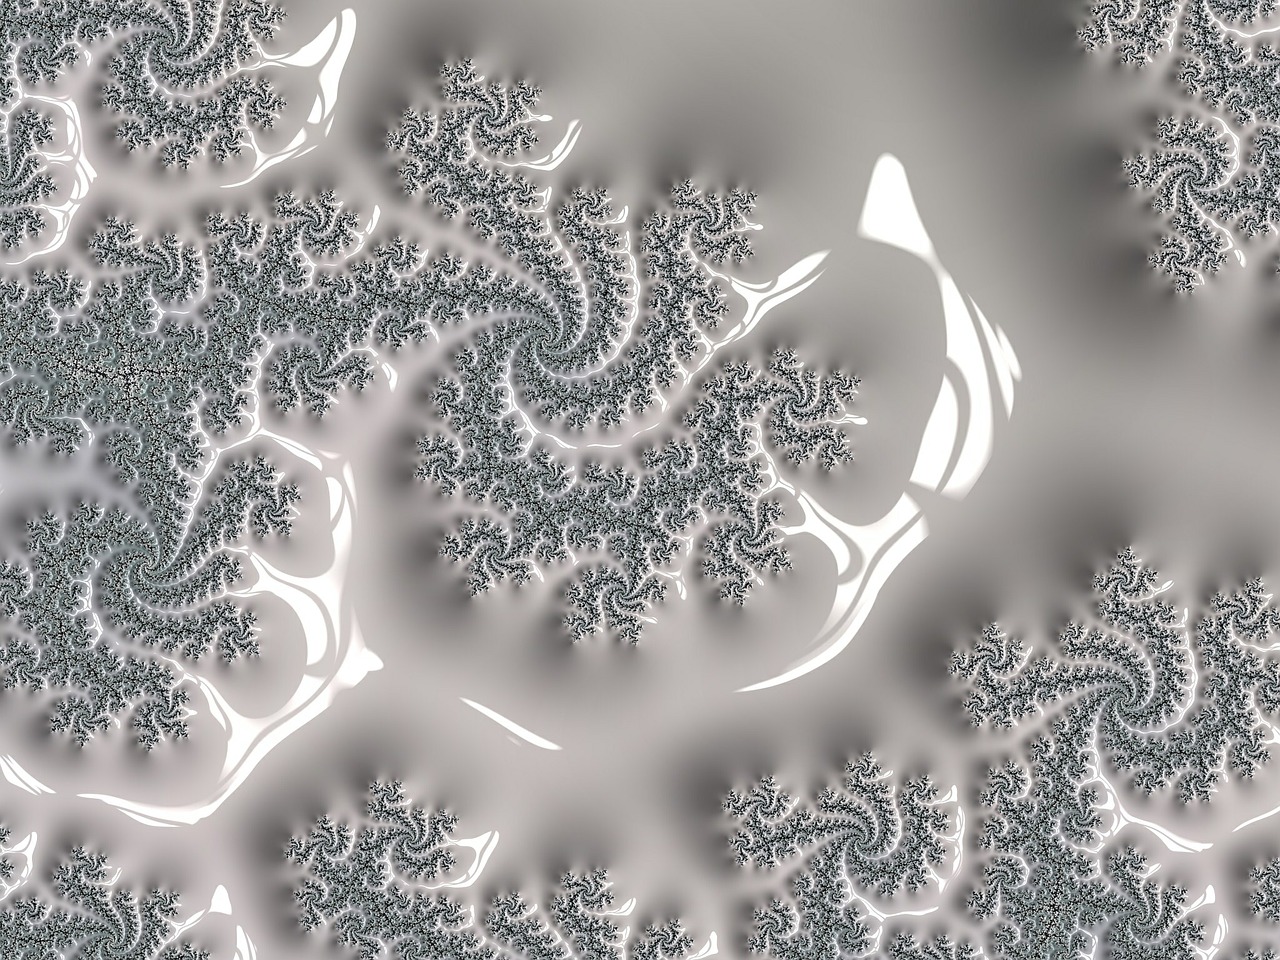 fractal liquid simulation free photo